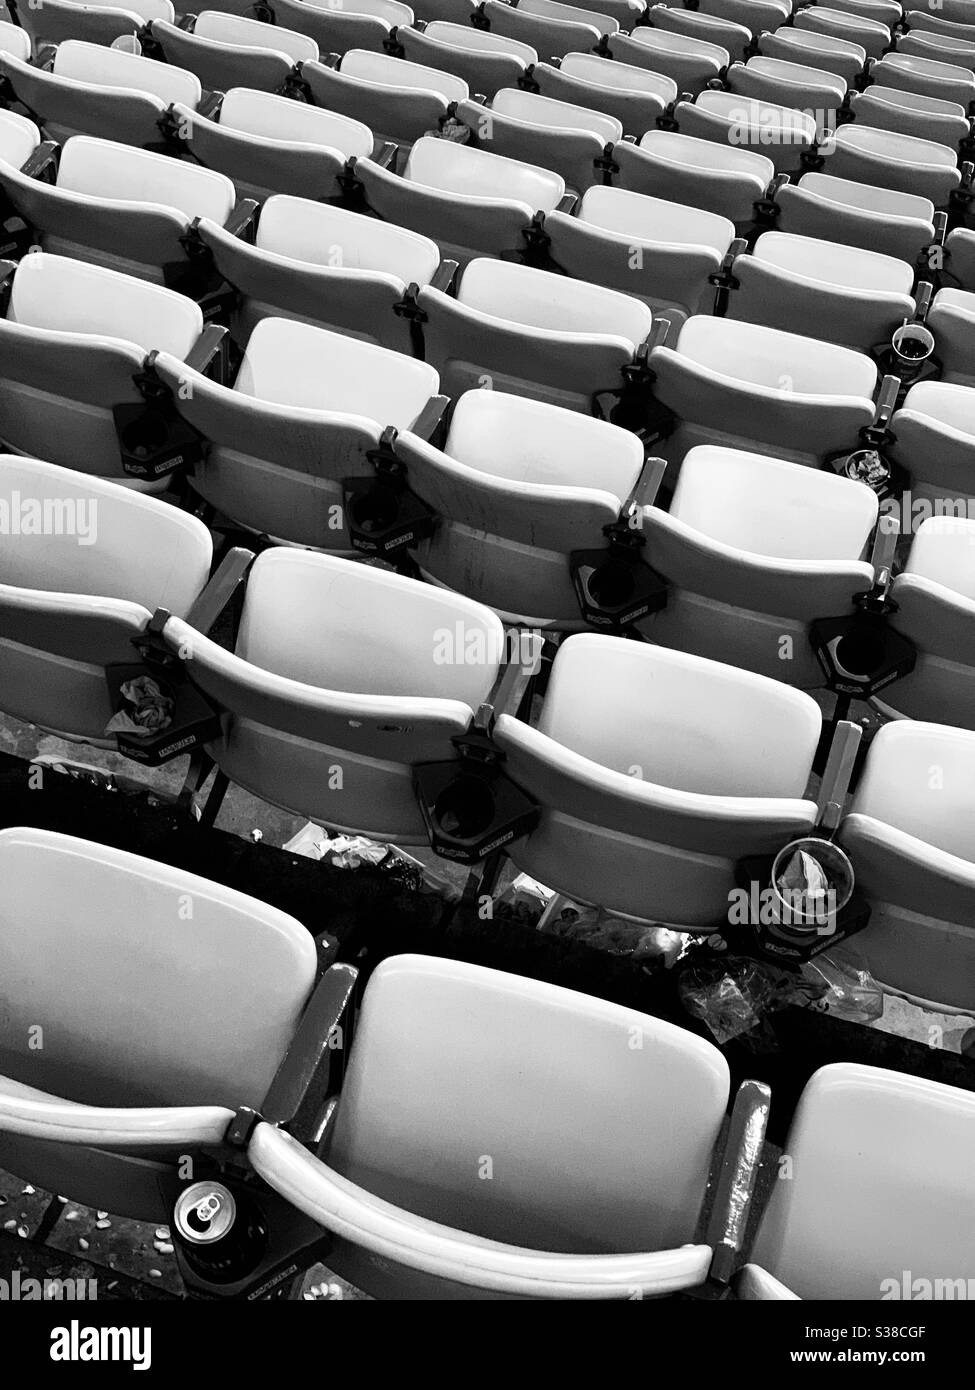 Empty stadium seats in a ball park. Stock Photo